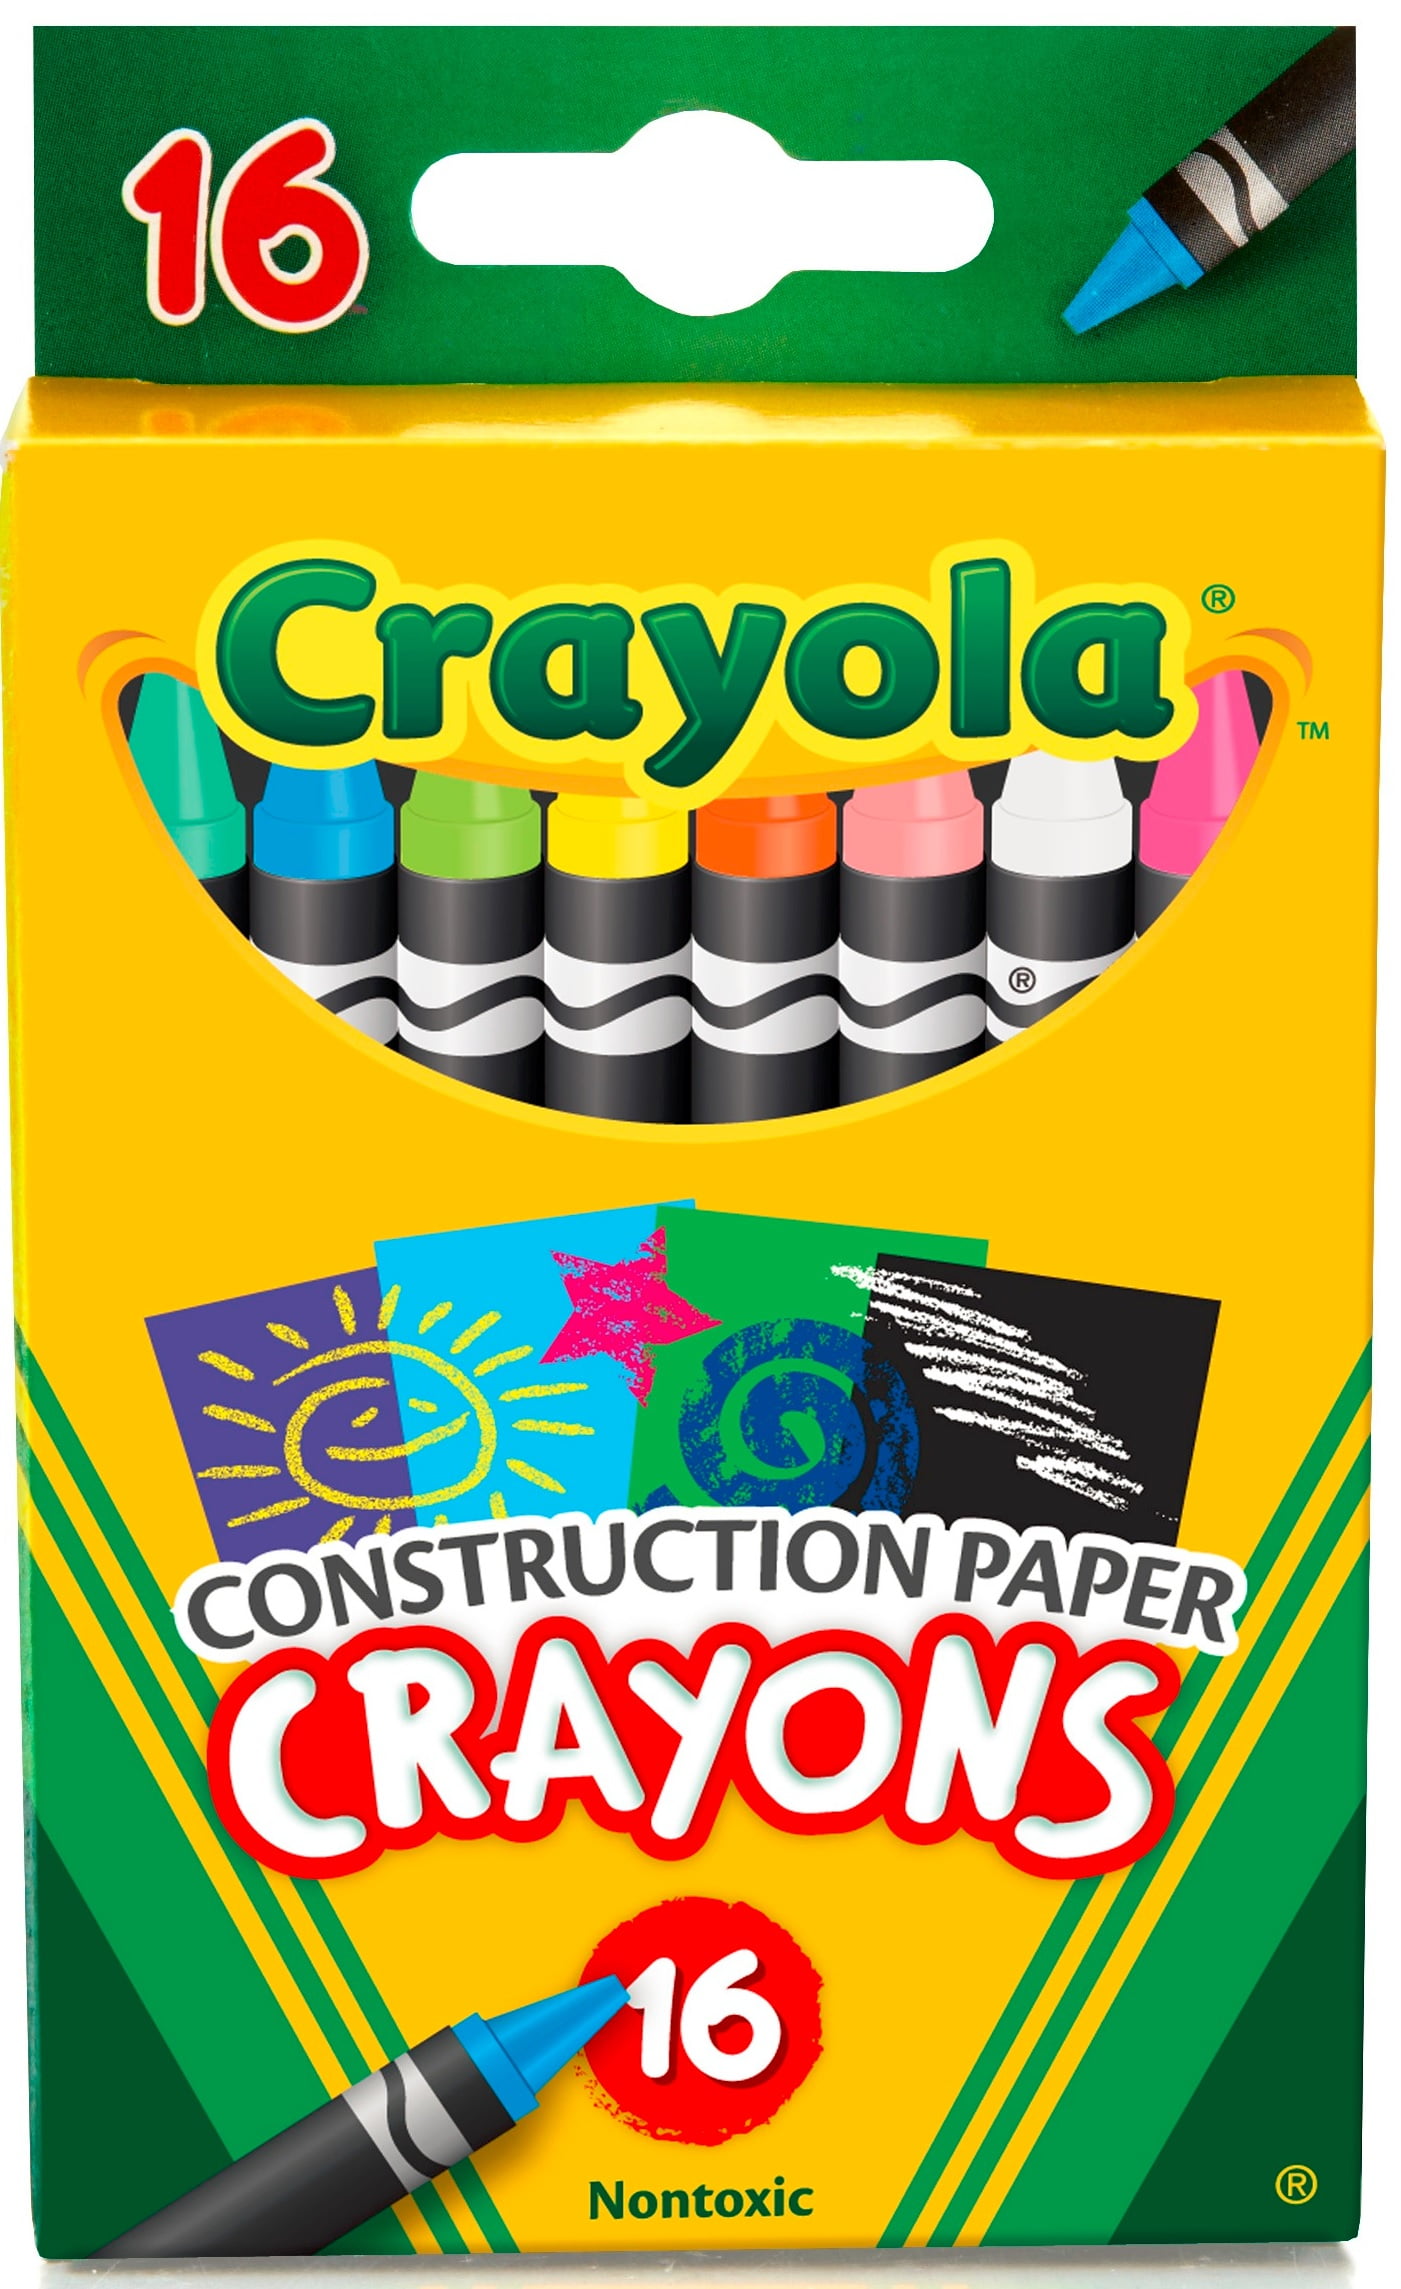 Crayola Crayons Window Cling Kit 2 Sheets 1 Pattern C273 8 Paint Tubes 